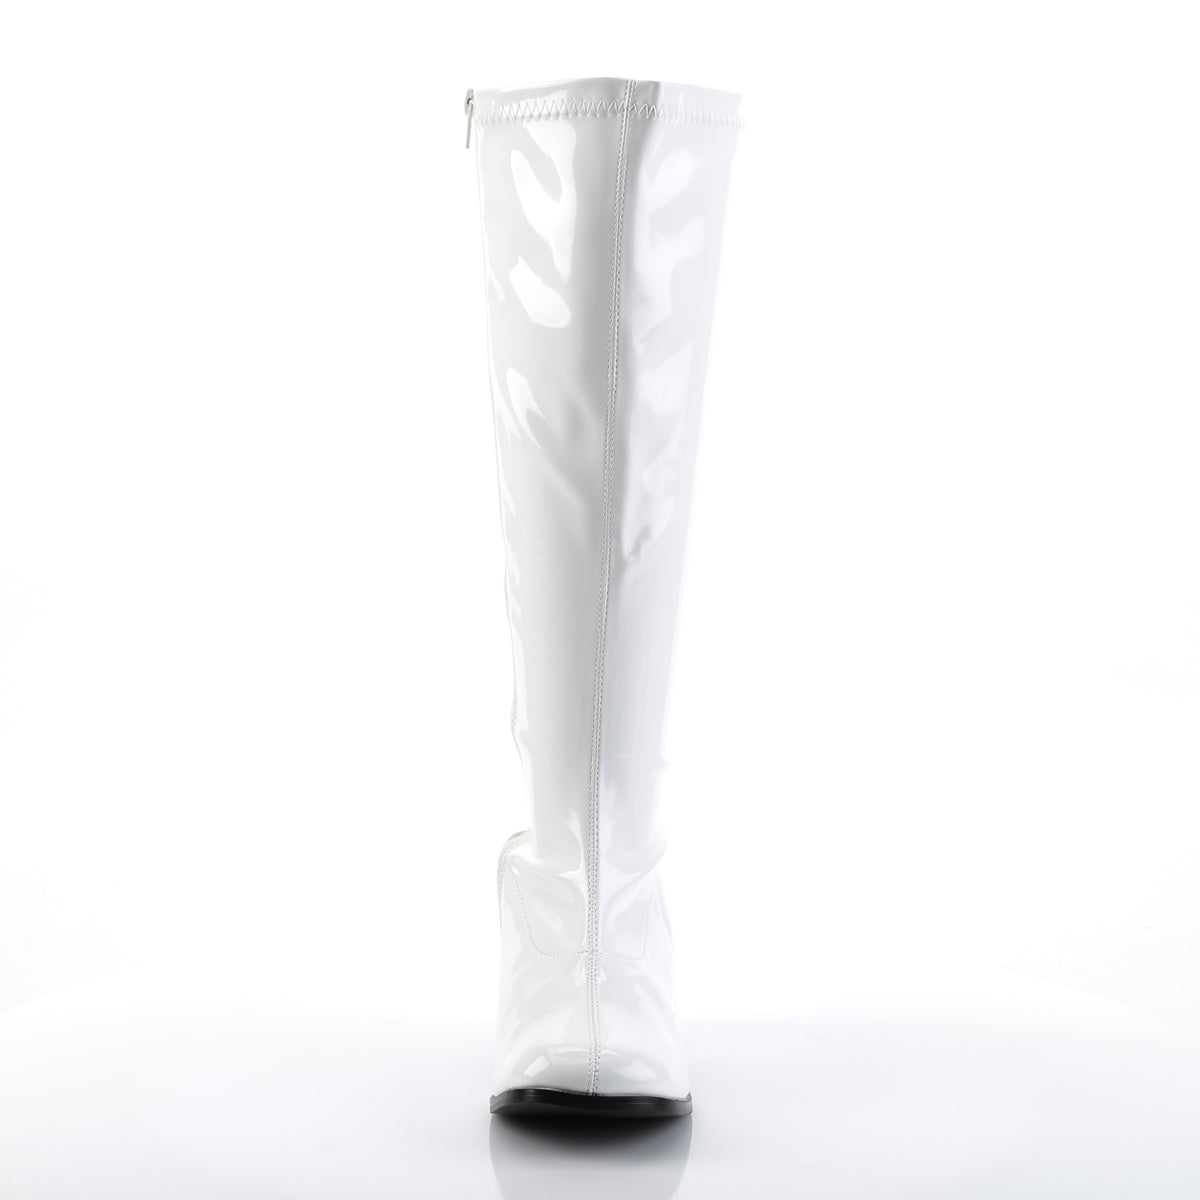 GOGO-300X Funtasma Fantasy White Stretch Patent Plus Sizes & Wide Width/Shaft [Retro Knee High Boots]